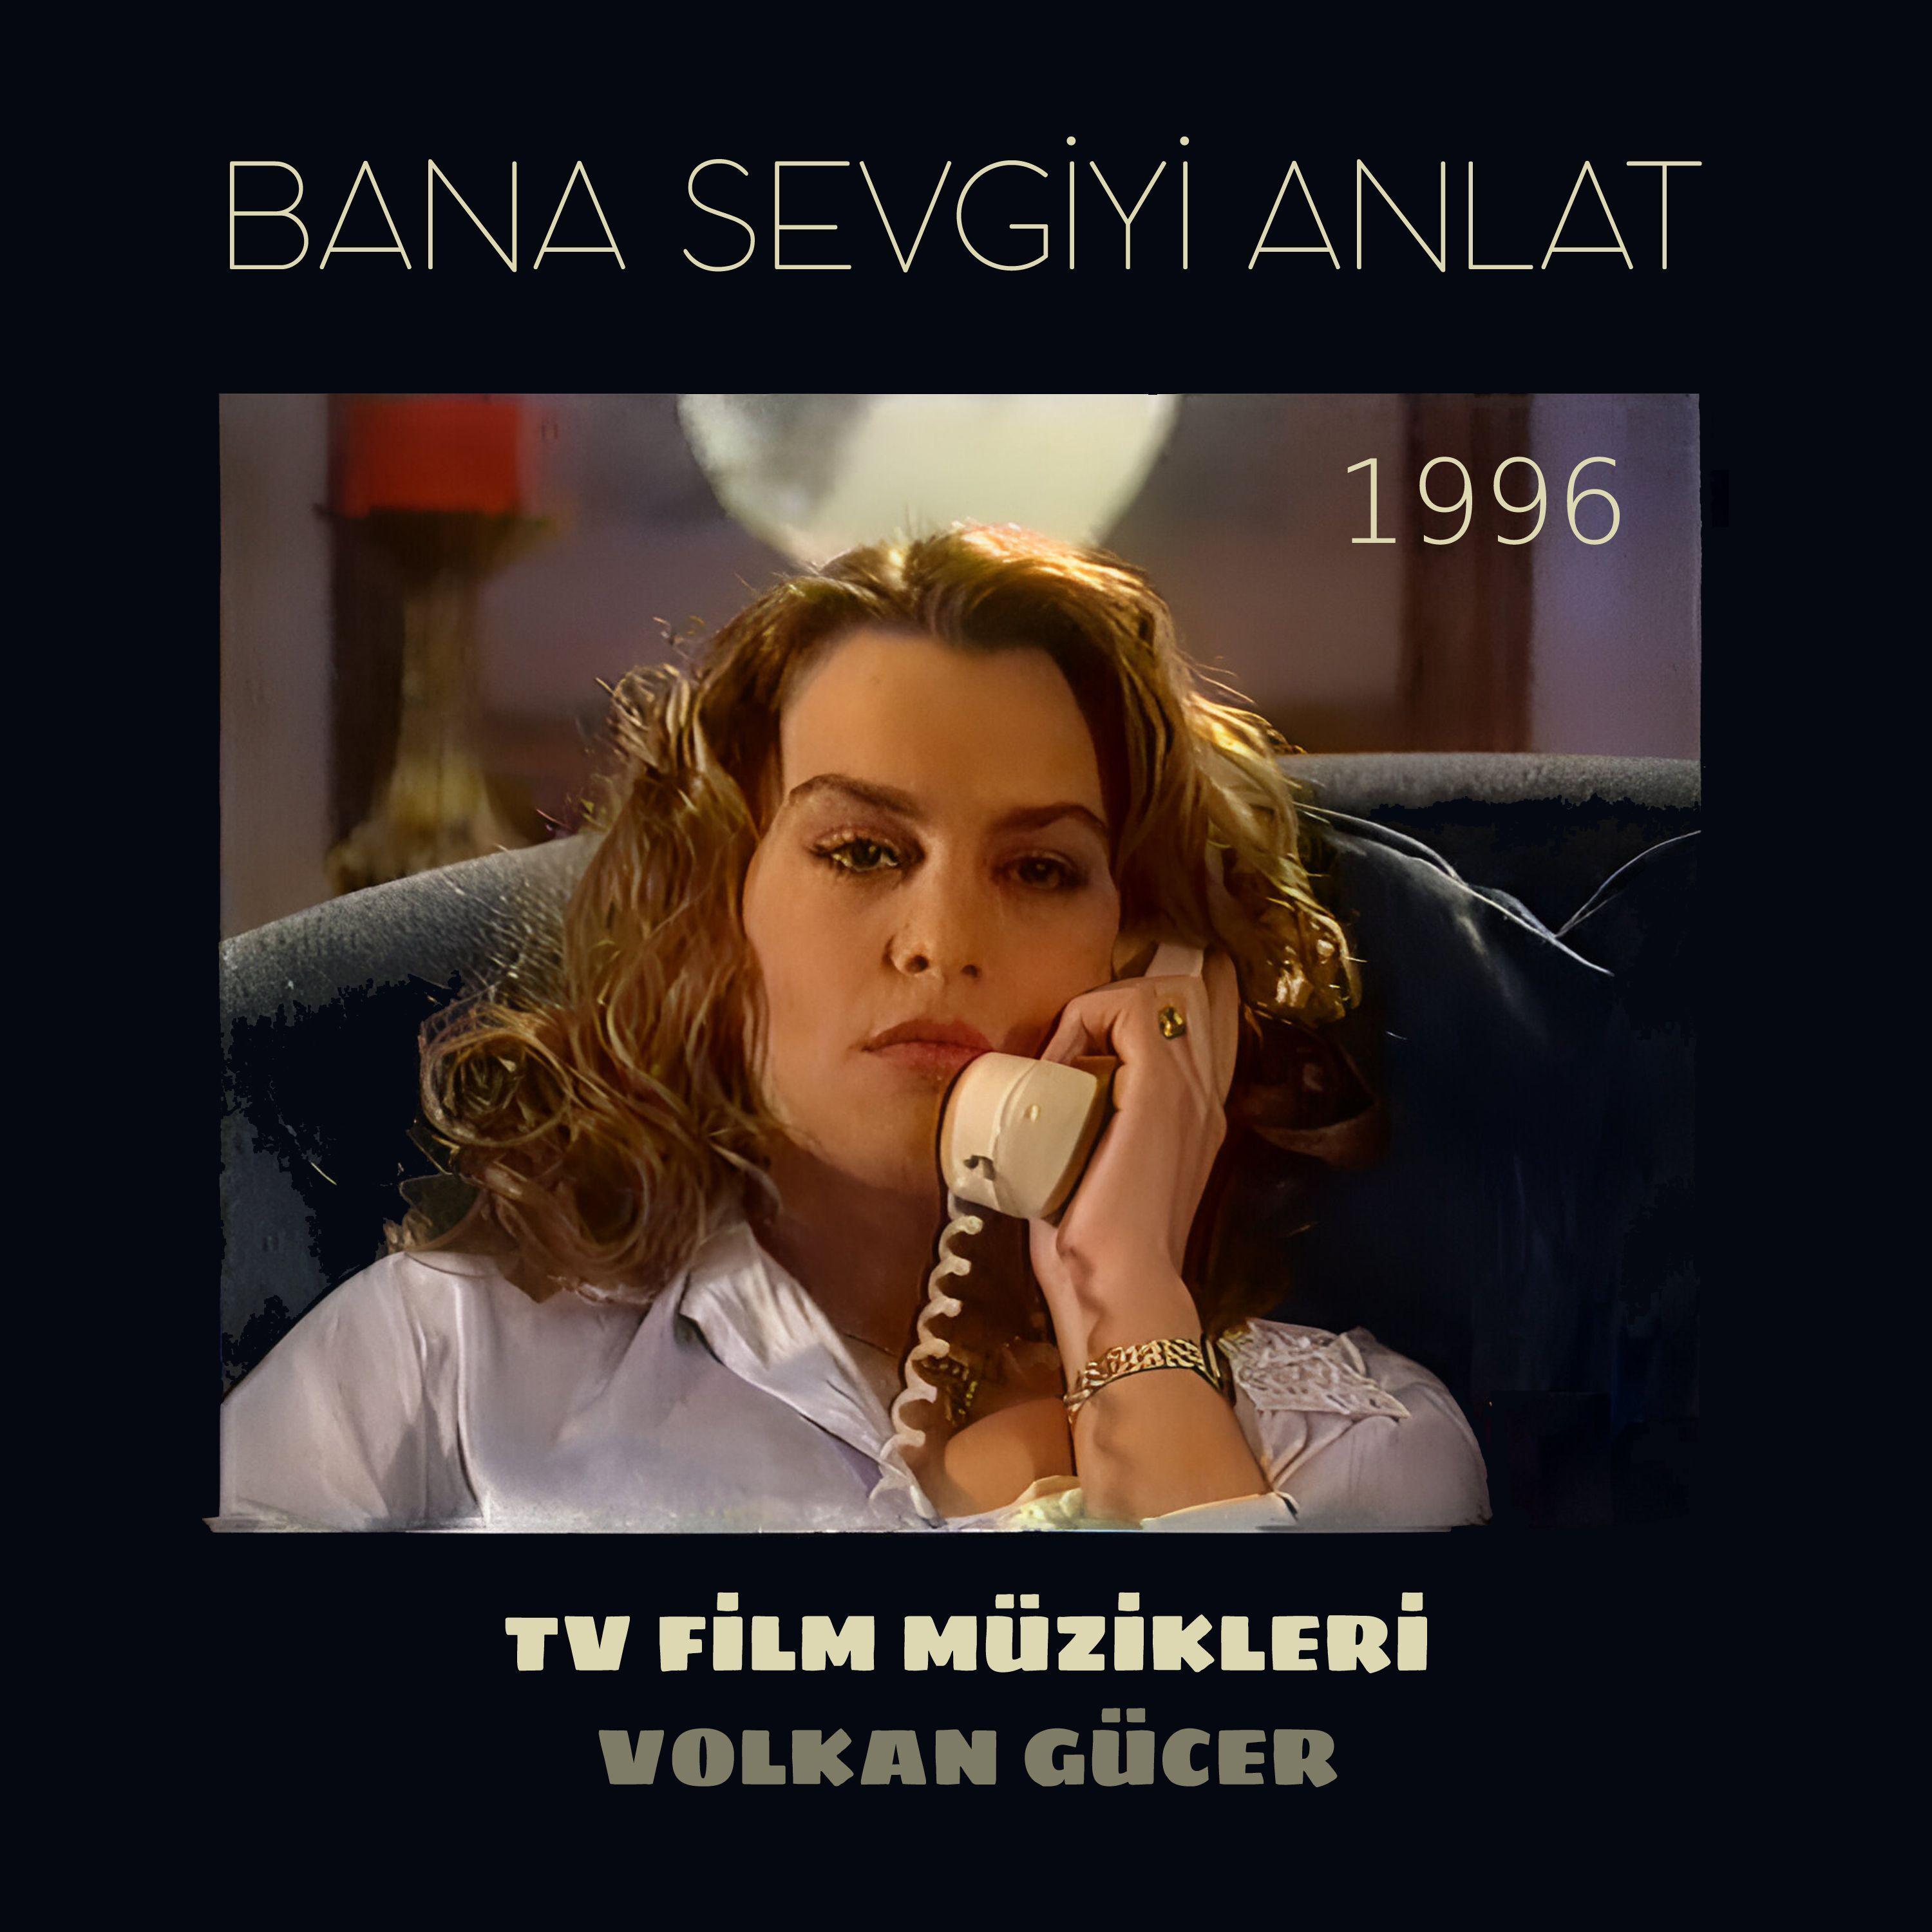 Volkan Gücer - Bana Sevgiyi Anlat Gerilim (Original Motion Picture Soundtrack)